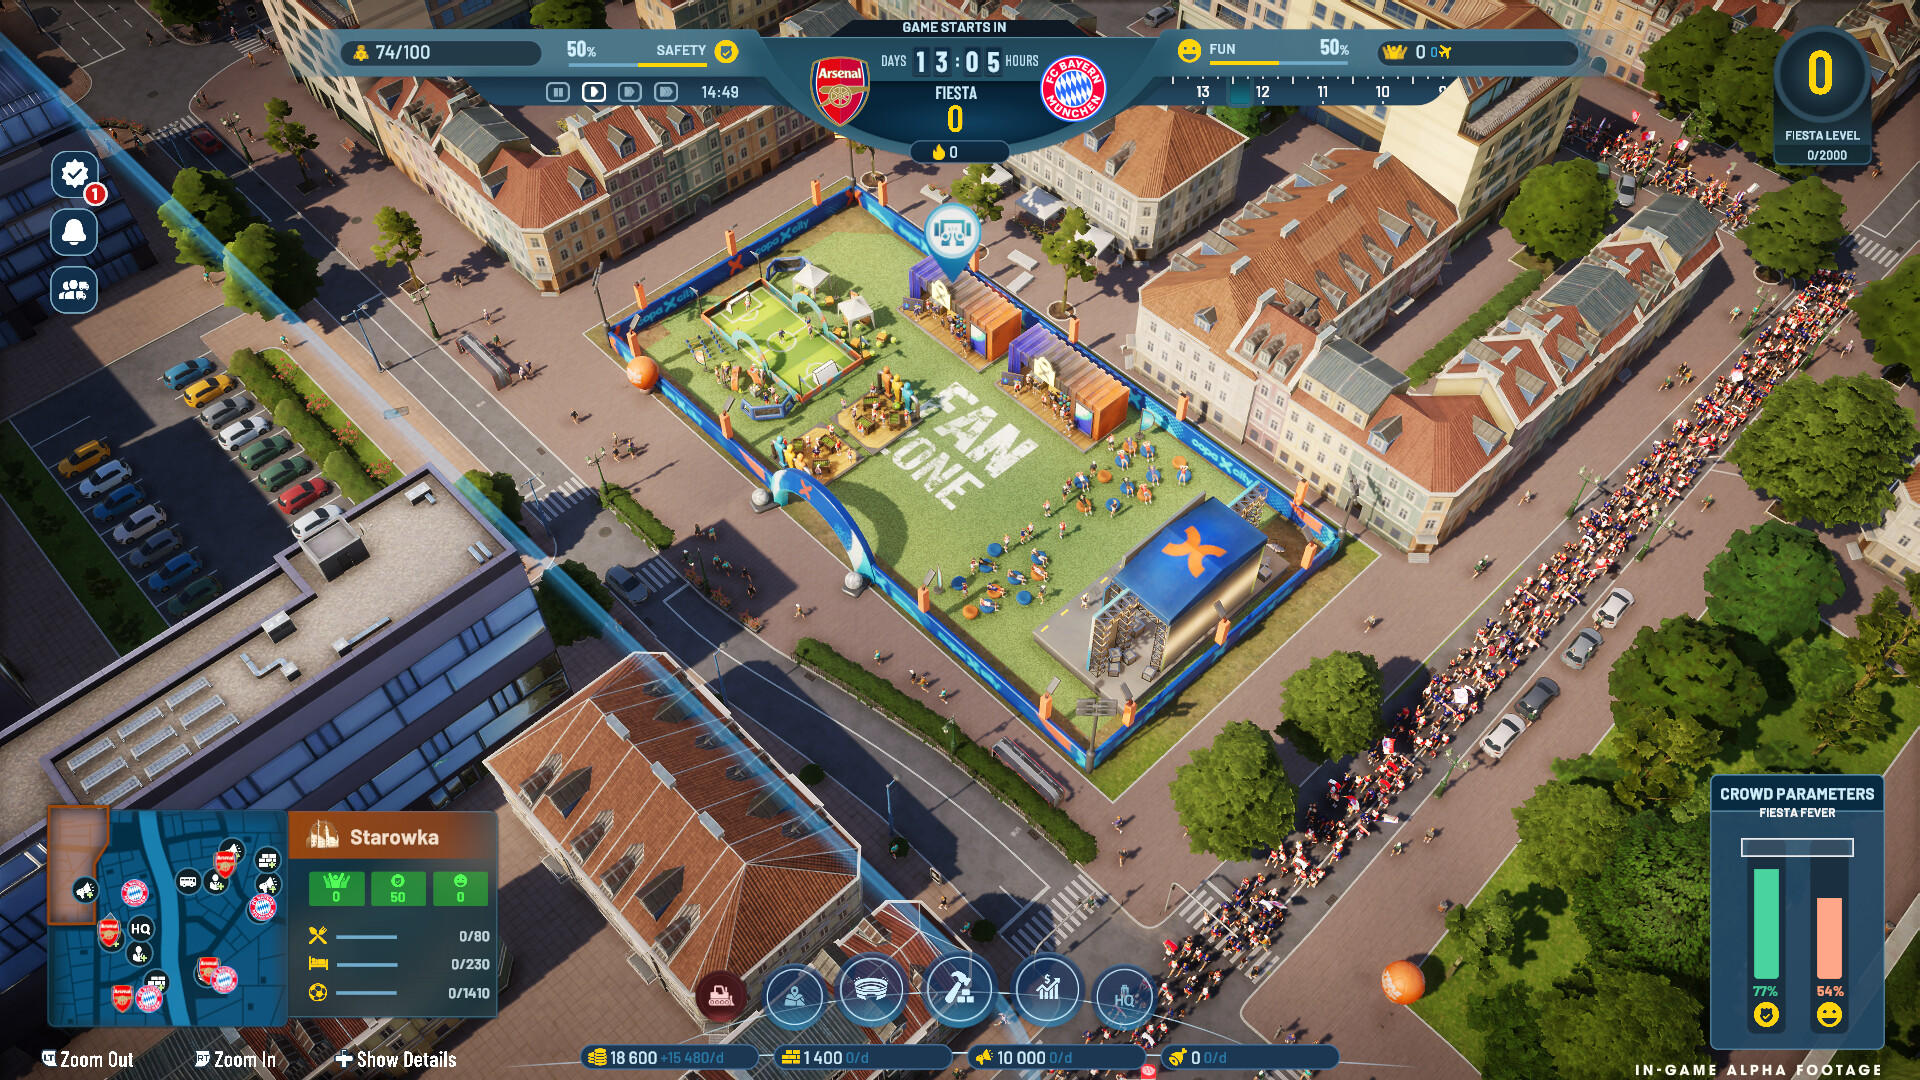 Screenshot of COPA CITY